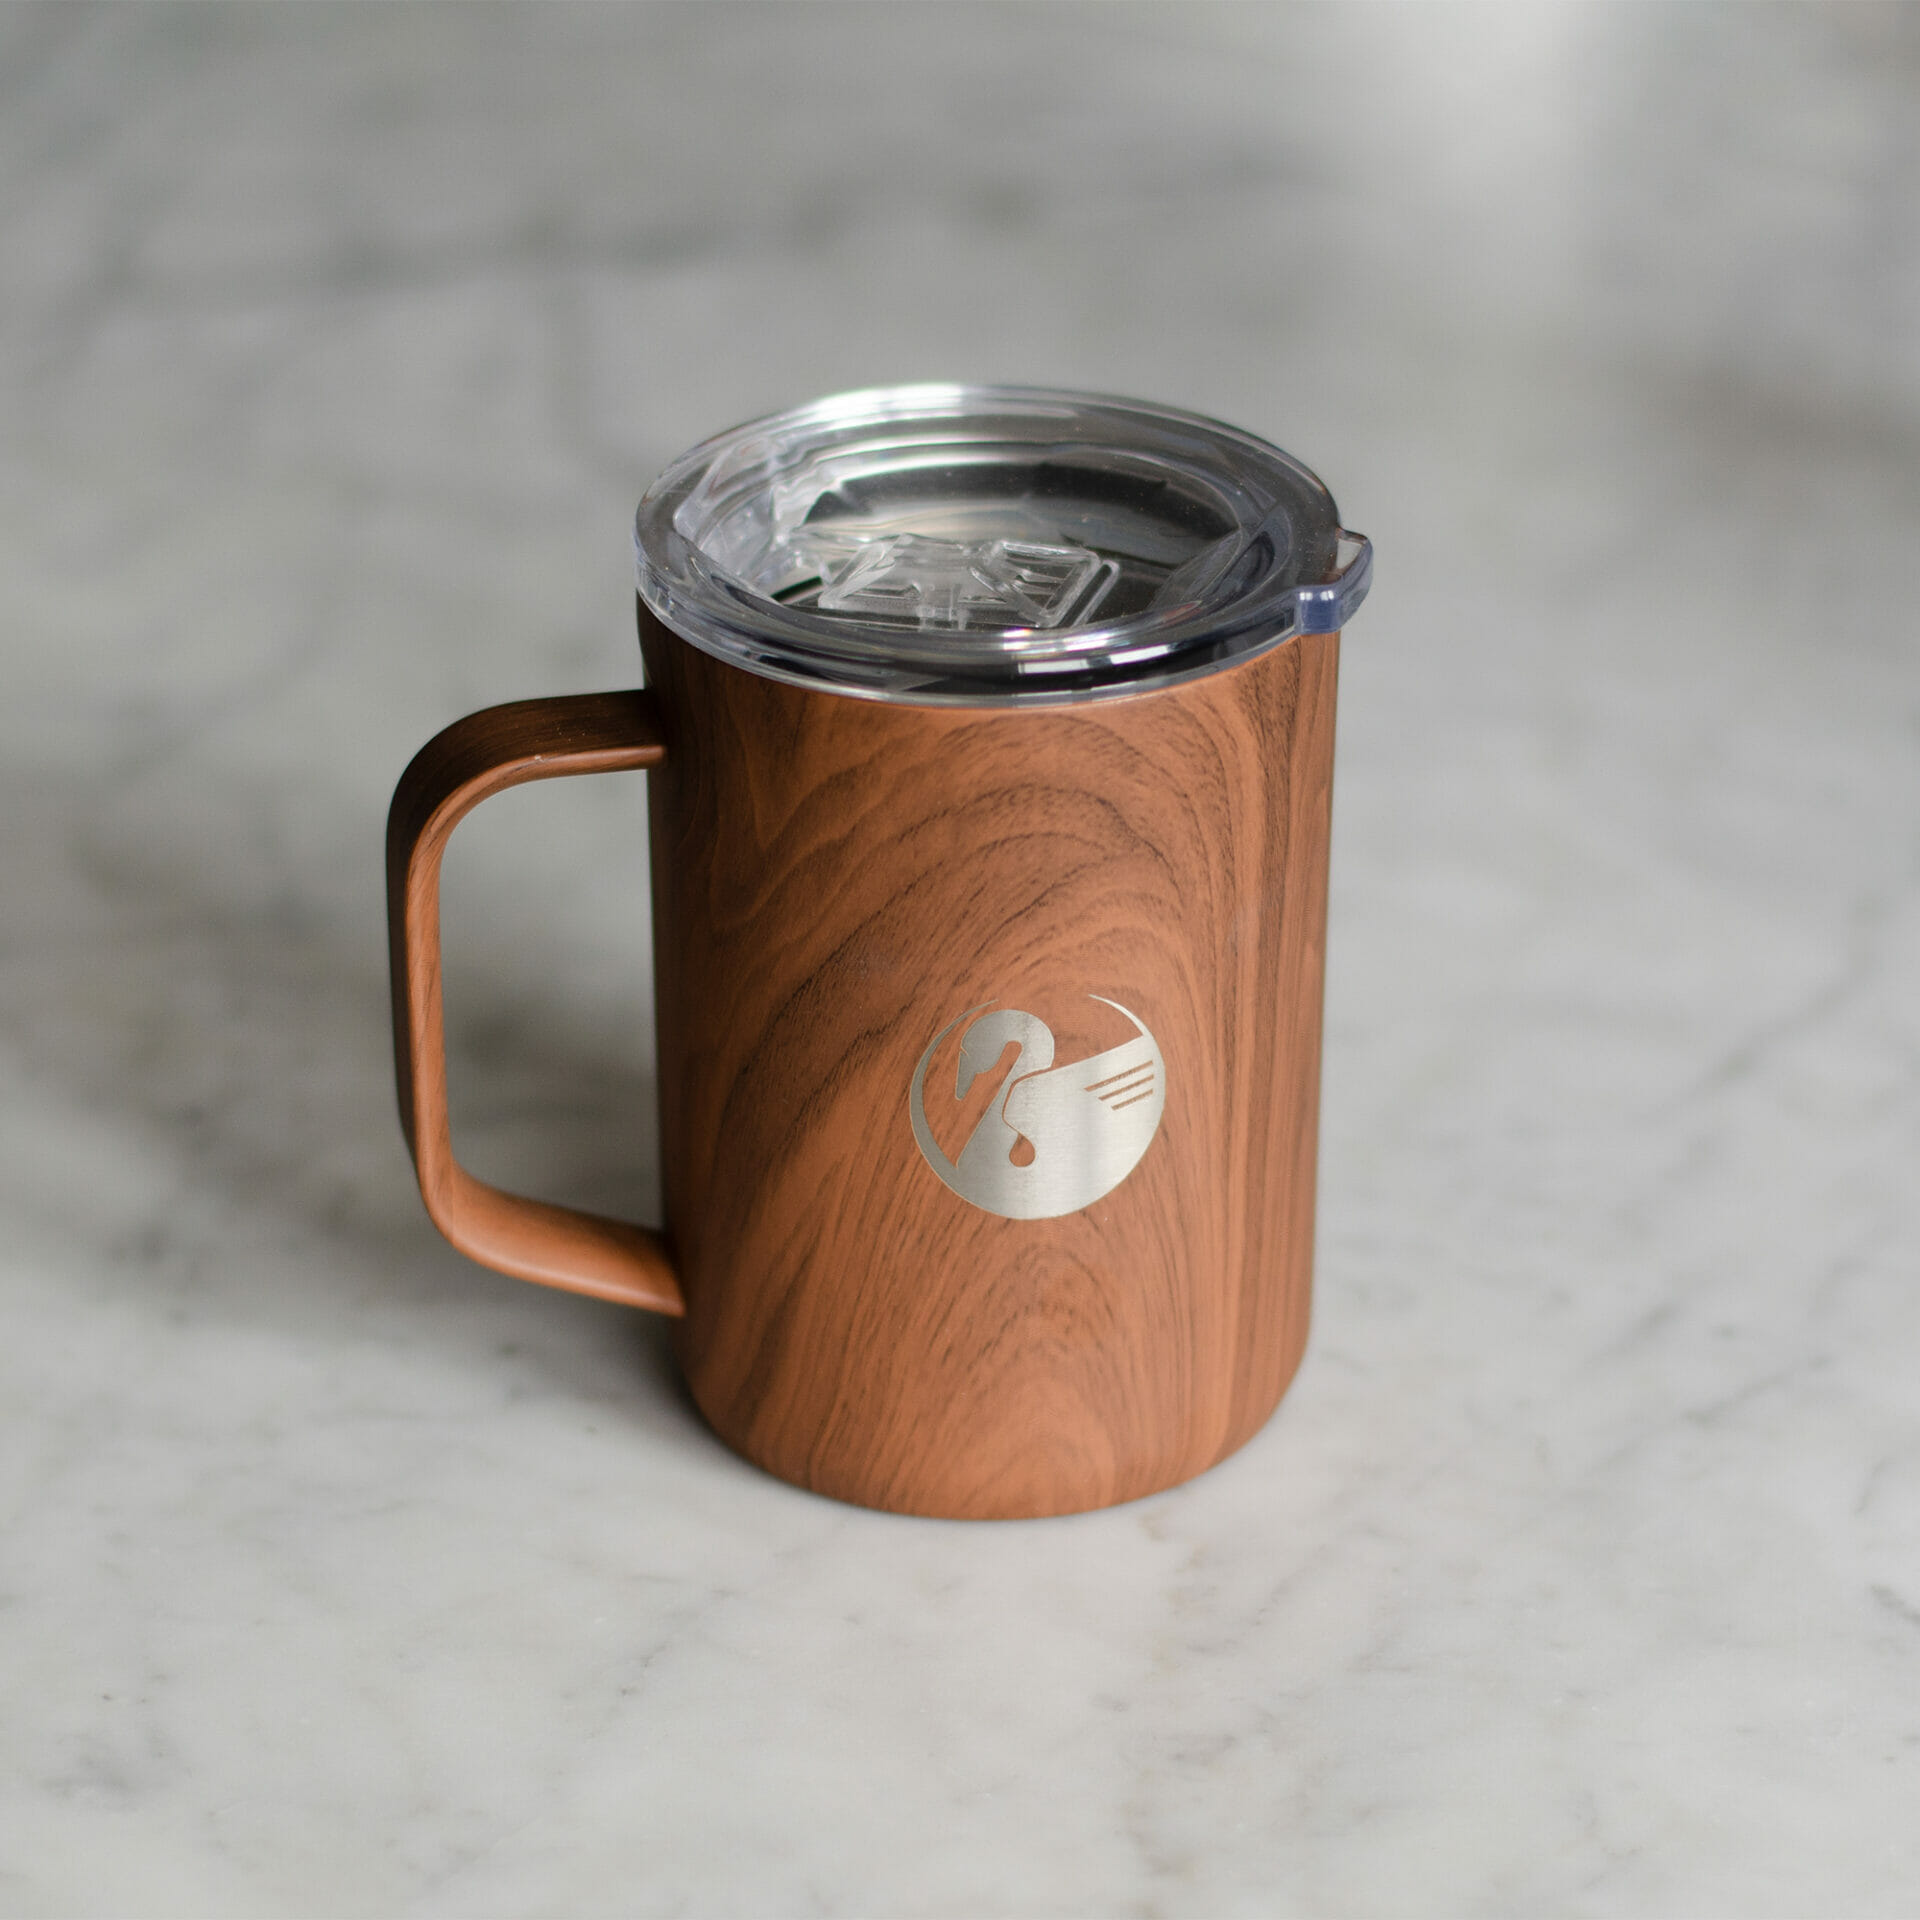 Ceramic Travel Mug With Lid And Handle - Road Mugs